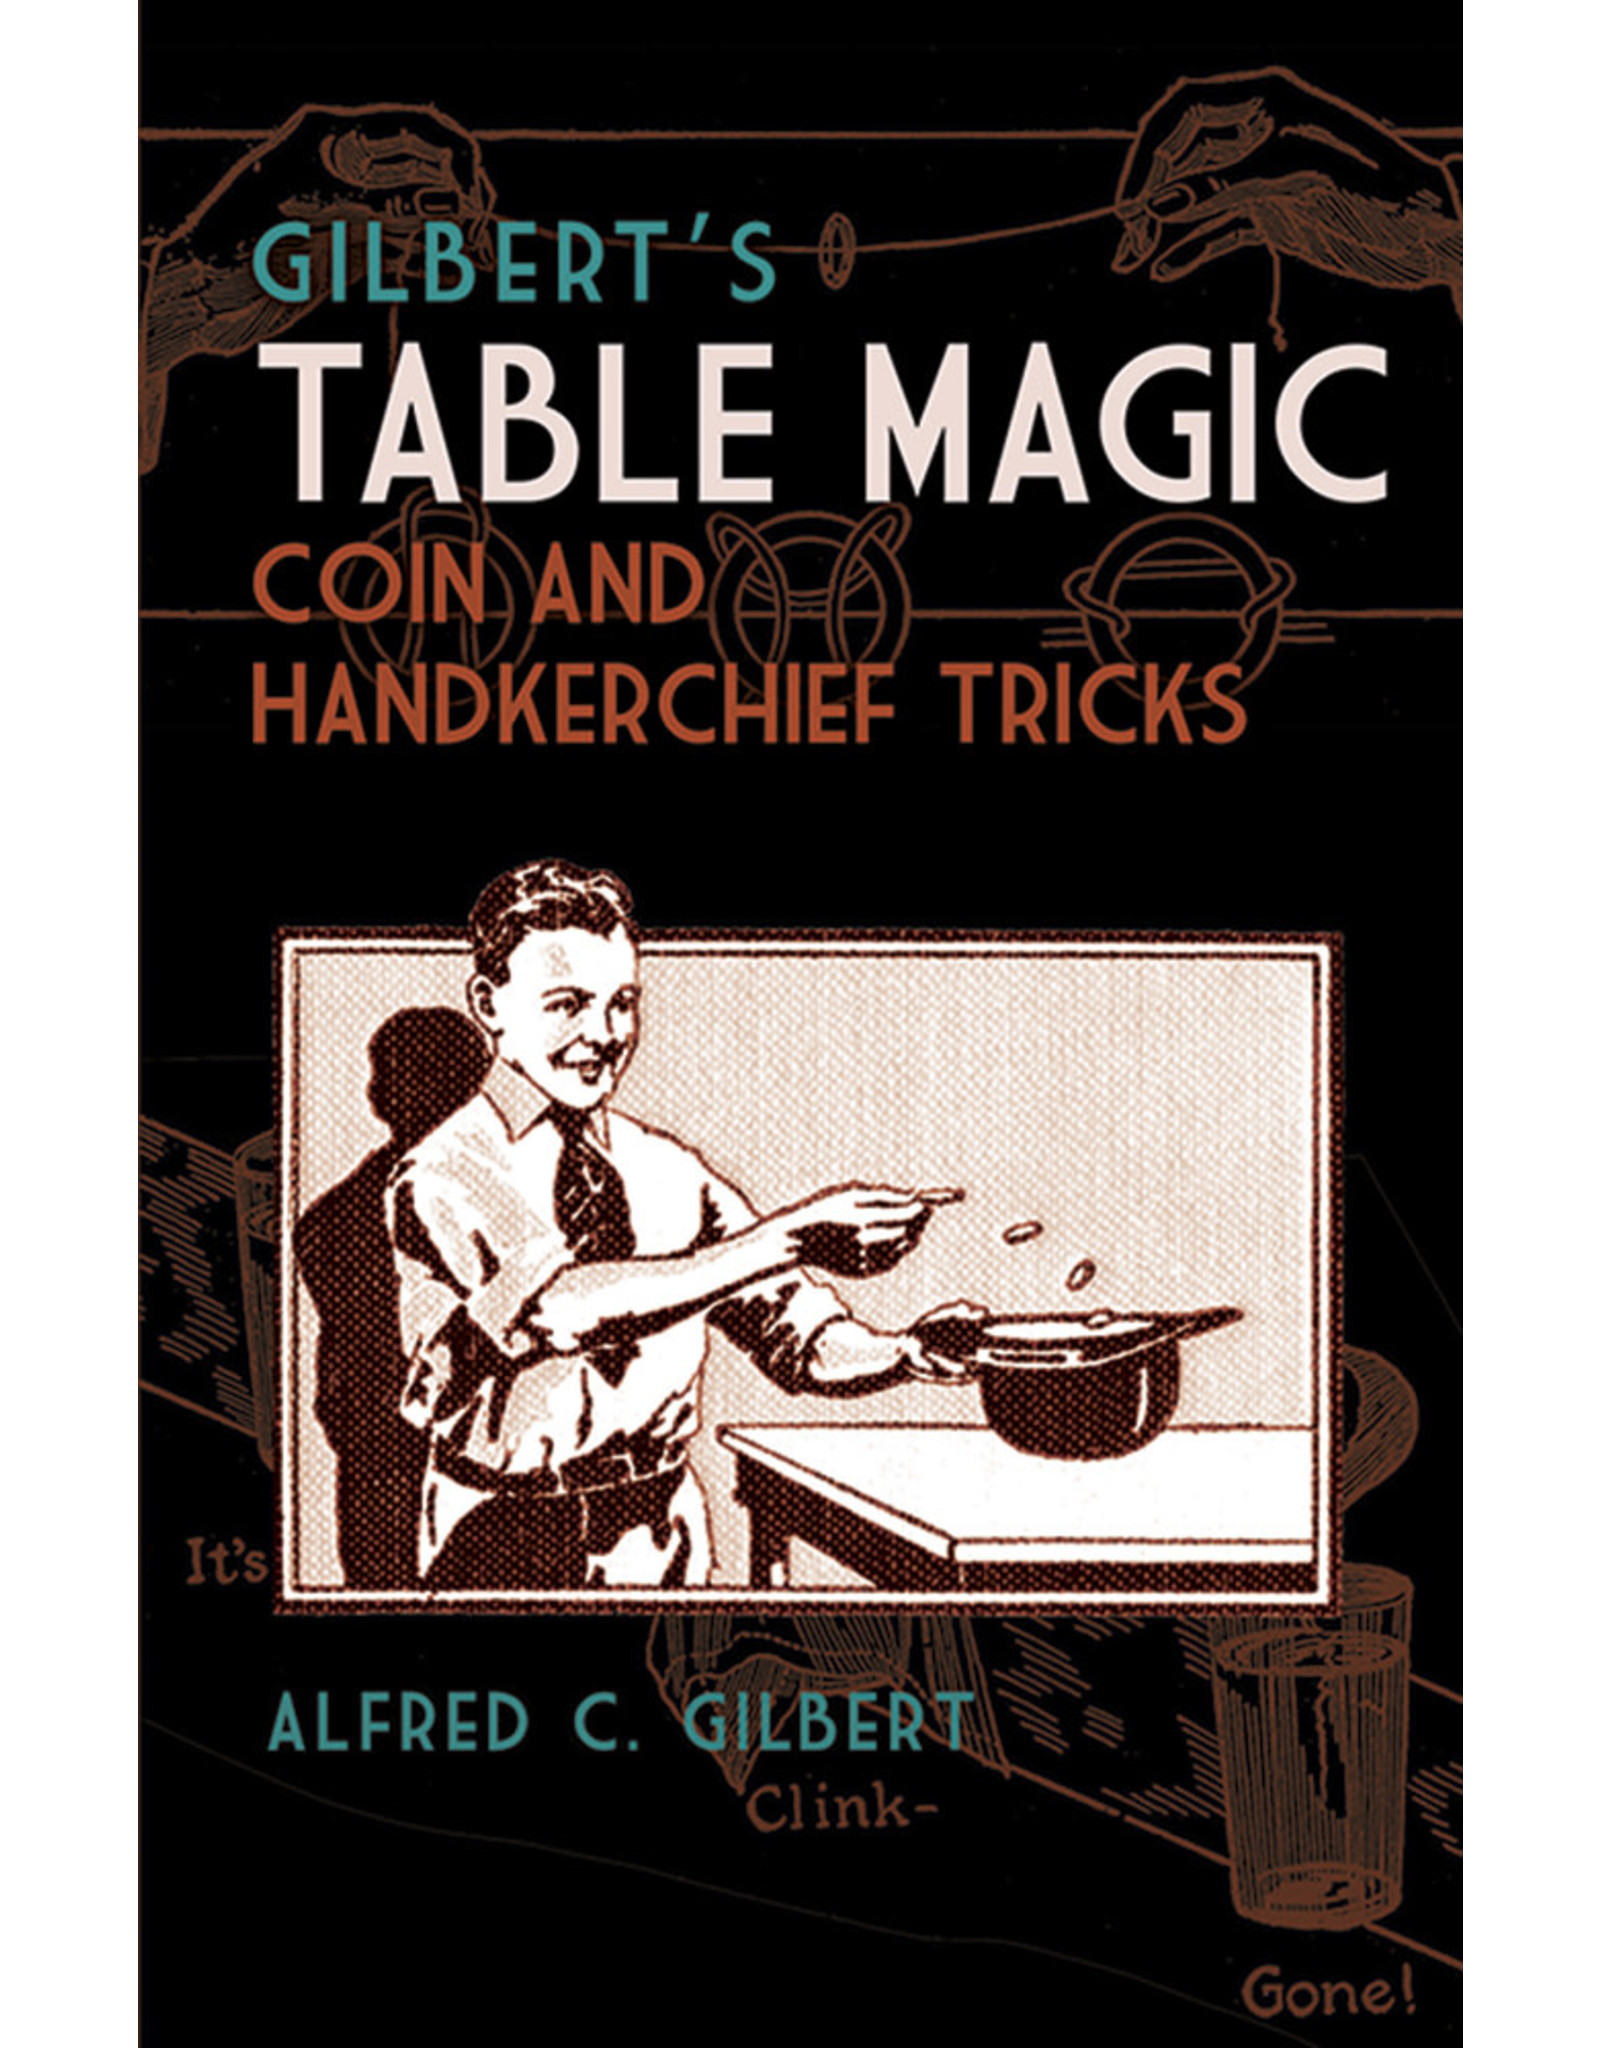 Gilbert's Table Magic: Coin and Handkerchief Tricks - Alfred C. Gilbert